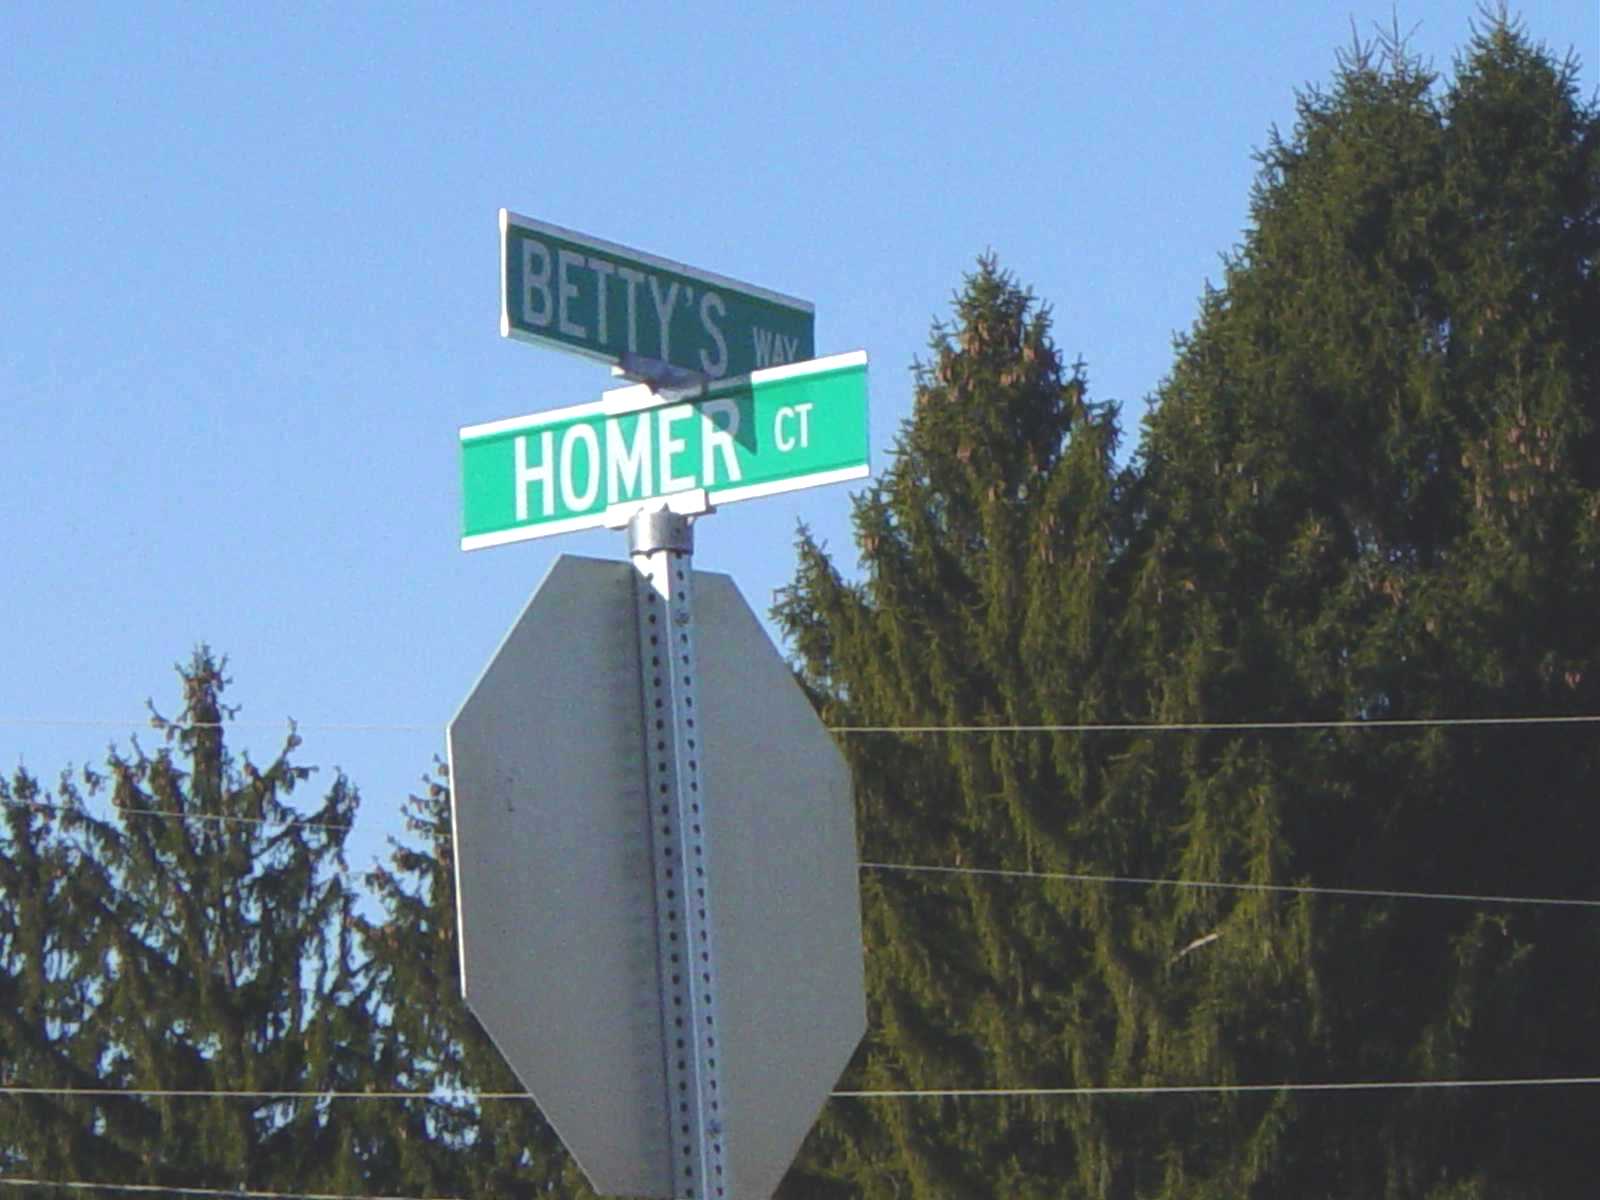 Homer Court and Betty's Way